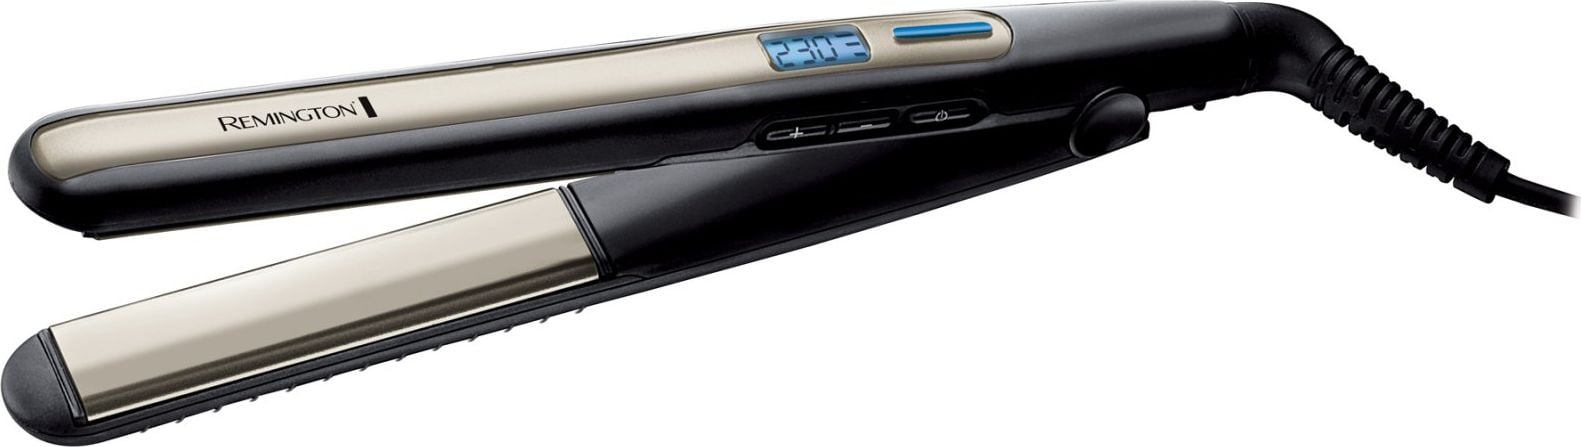 Placi de indreptat parul - Placa de indreptat parul Remington S6500, 230 grade, LCD, Turbo Boost, negru/gri